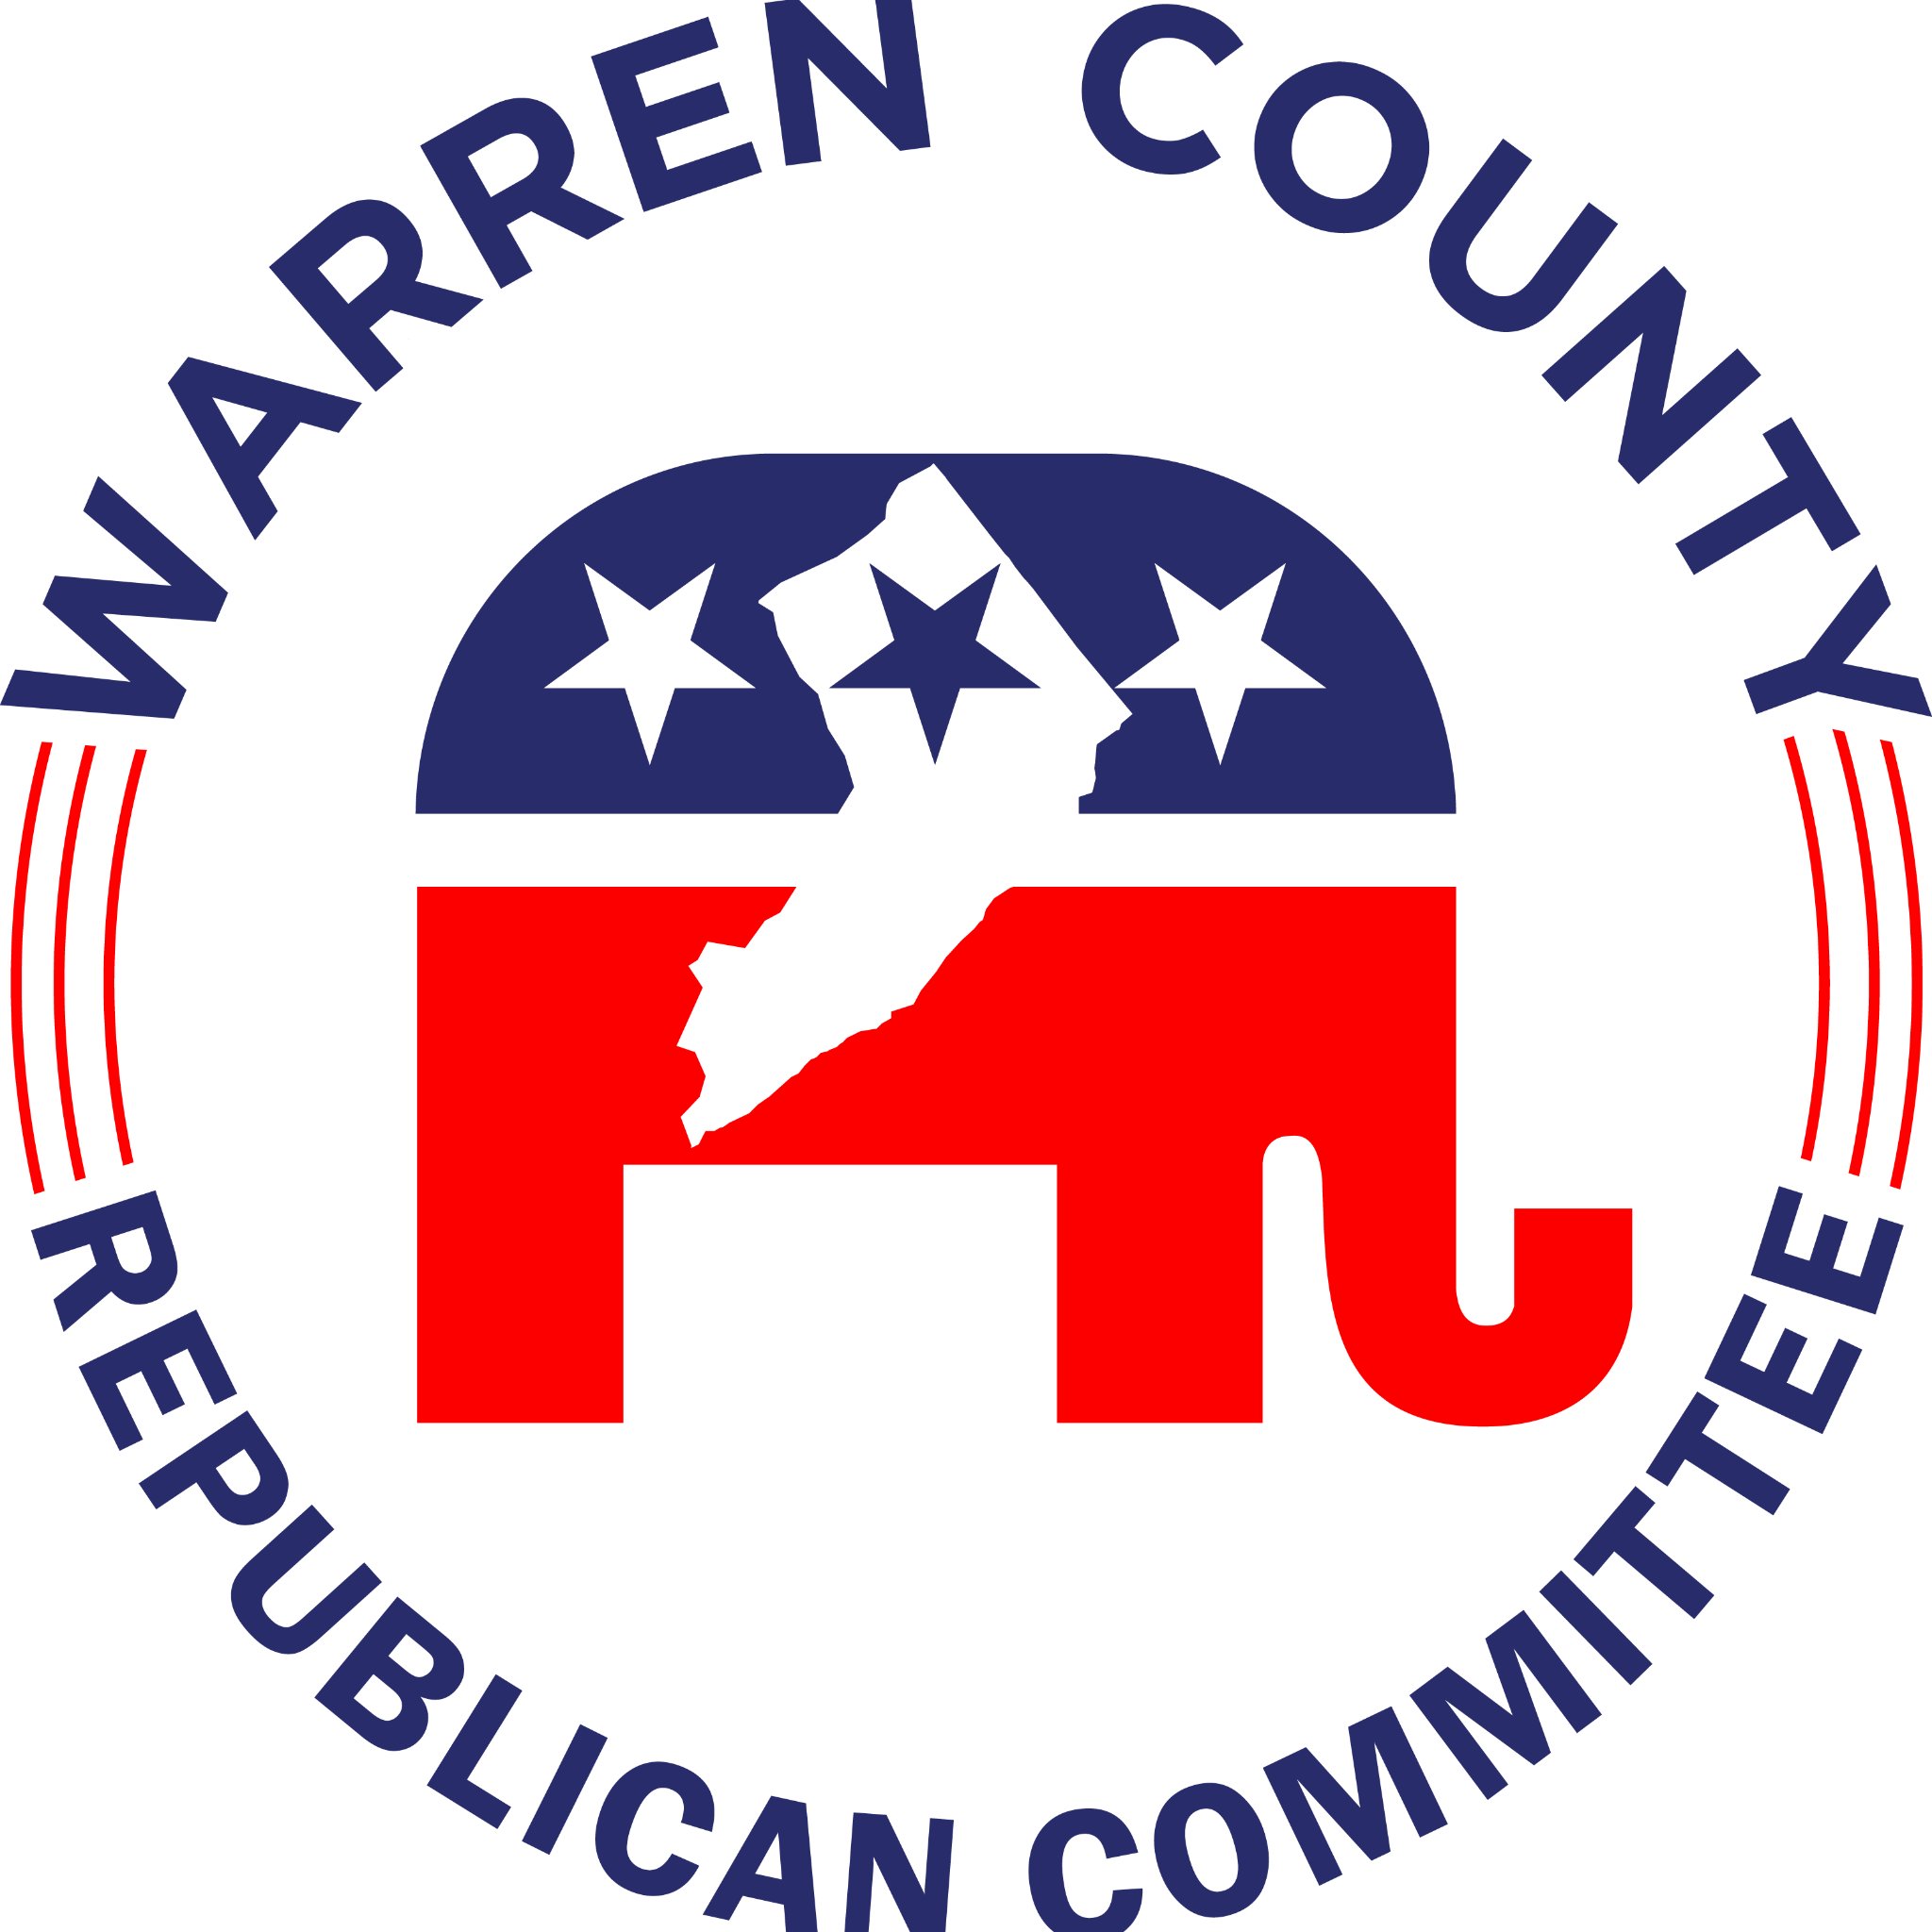 The Official Twitter account of the Warren County Republican Committee, Warren County, NJ.